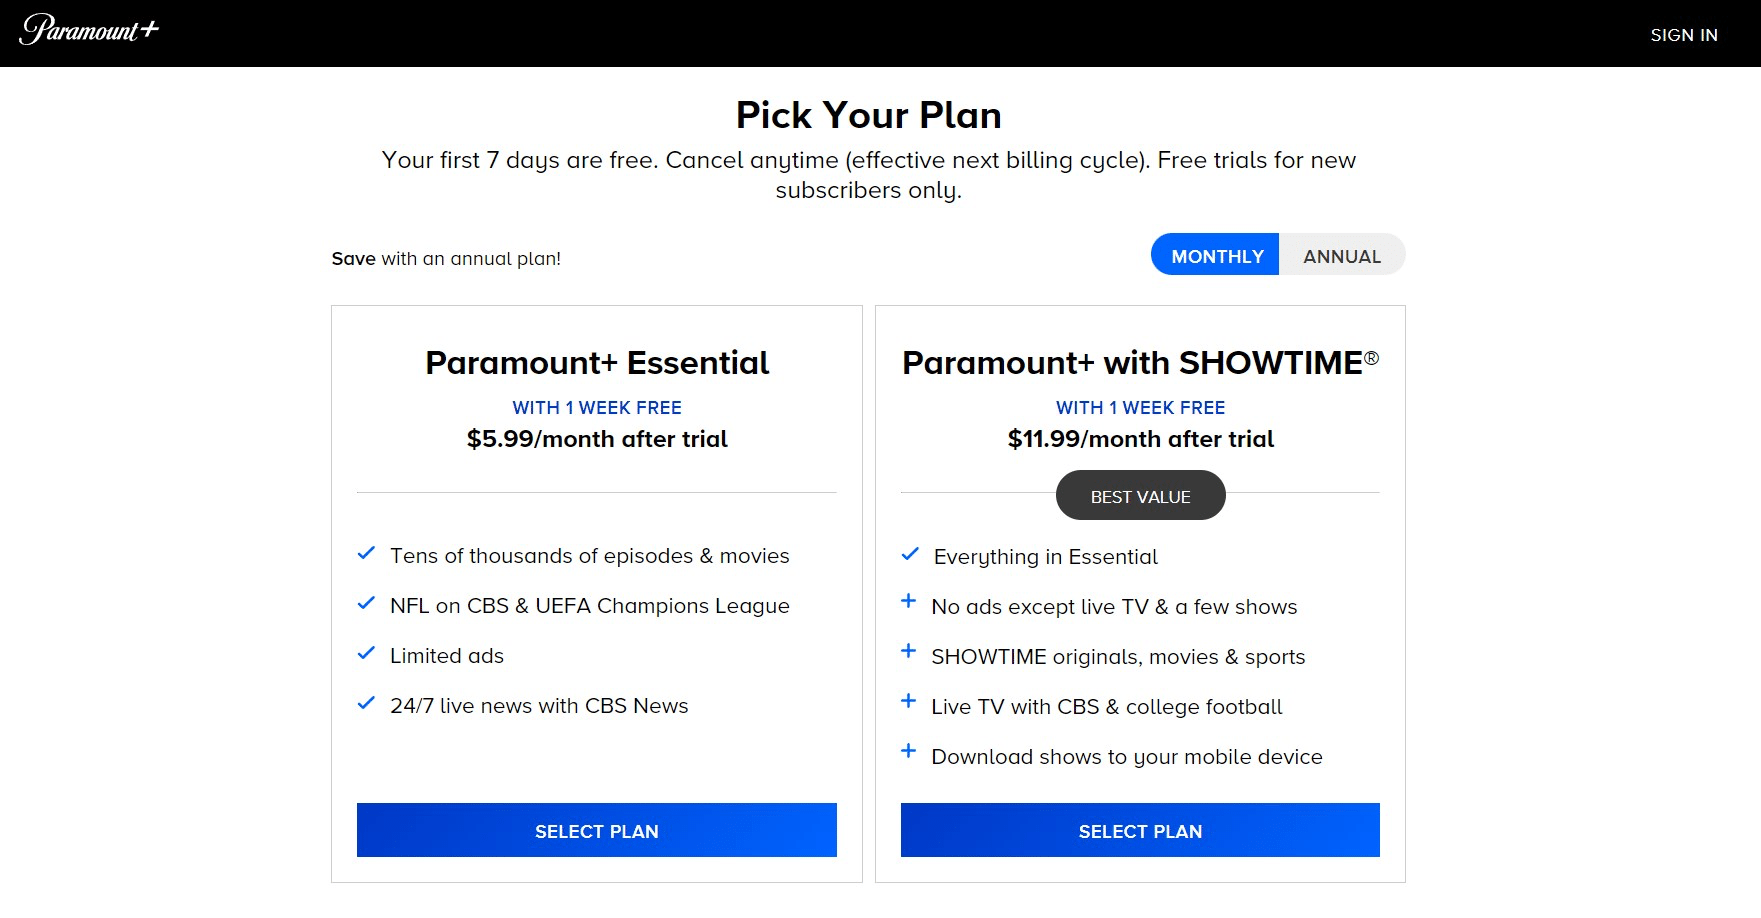 paramount+ pick your plan screen